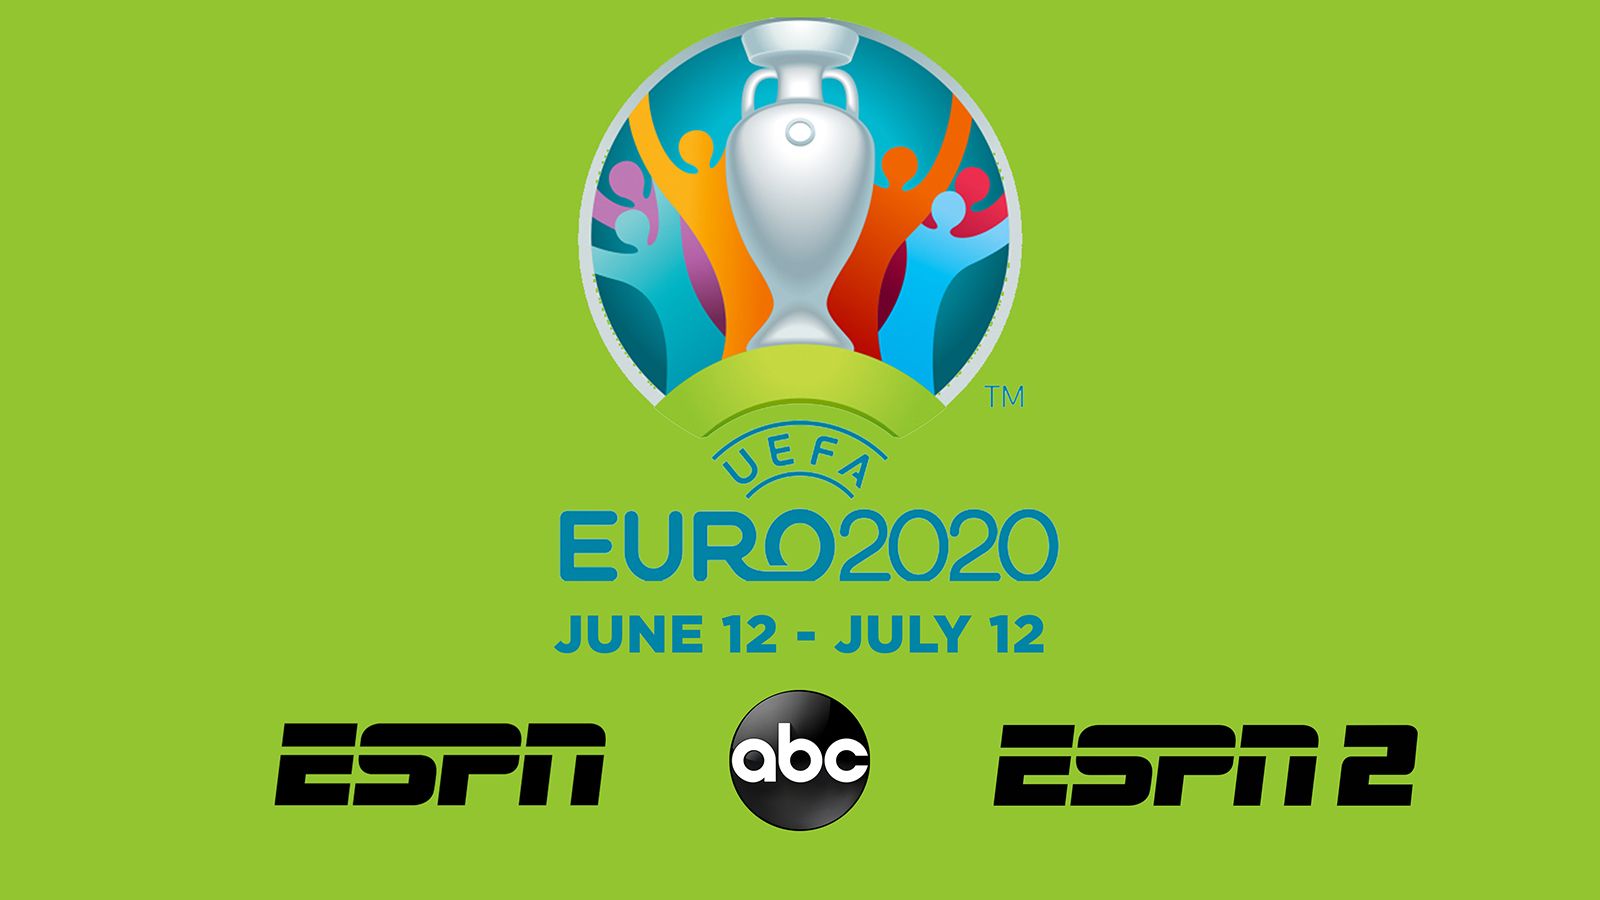 ESPN and ABC Present UEFA European Football Championship 2020 Press Room U.S